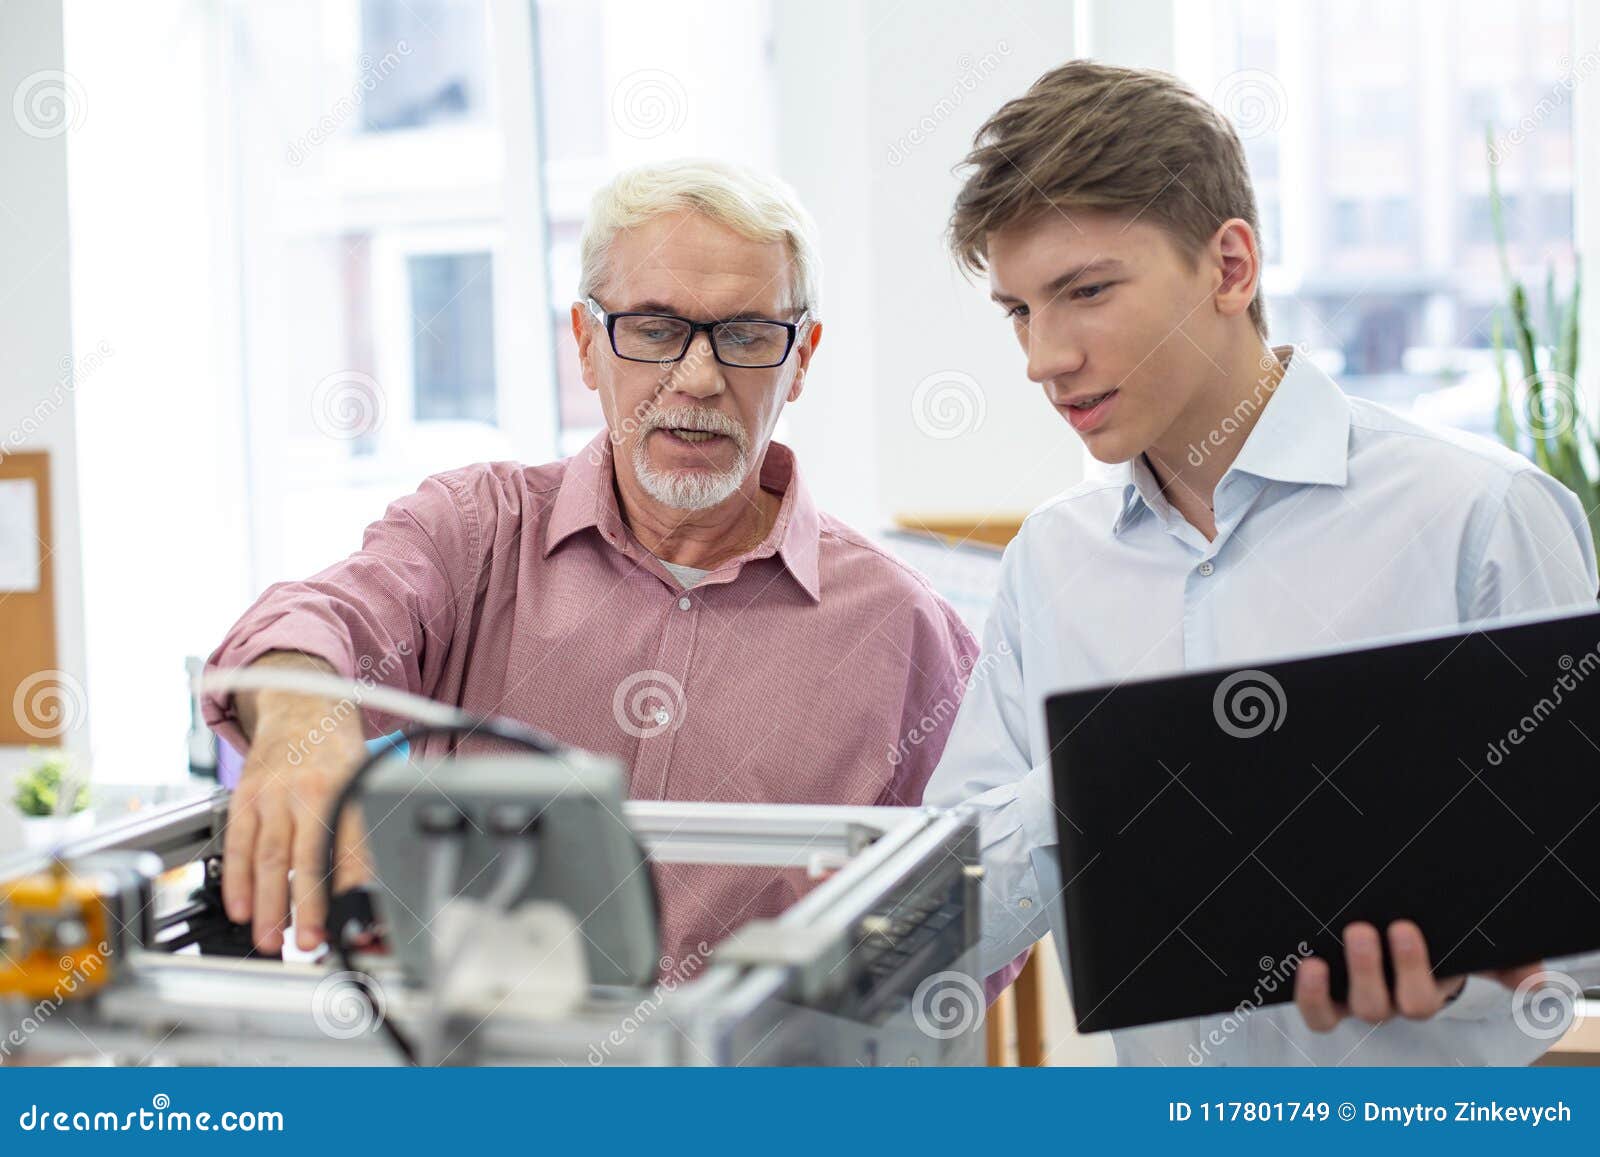 pleasant senior engineer teaching about 3d printer